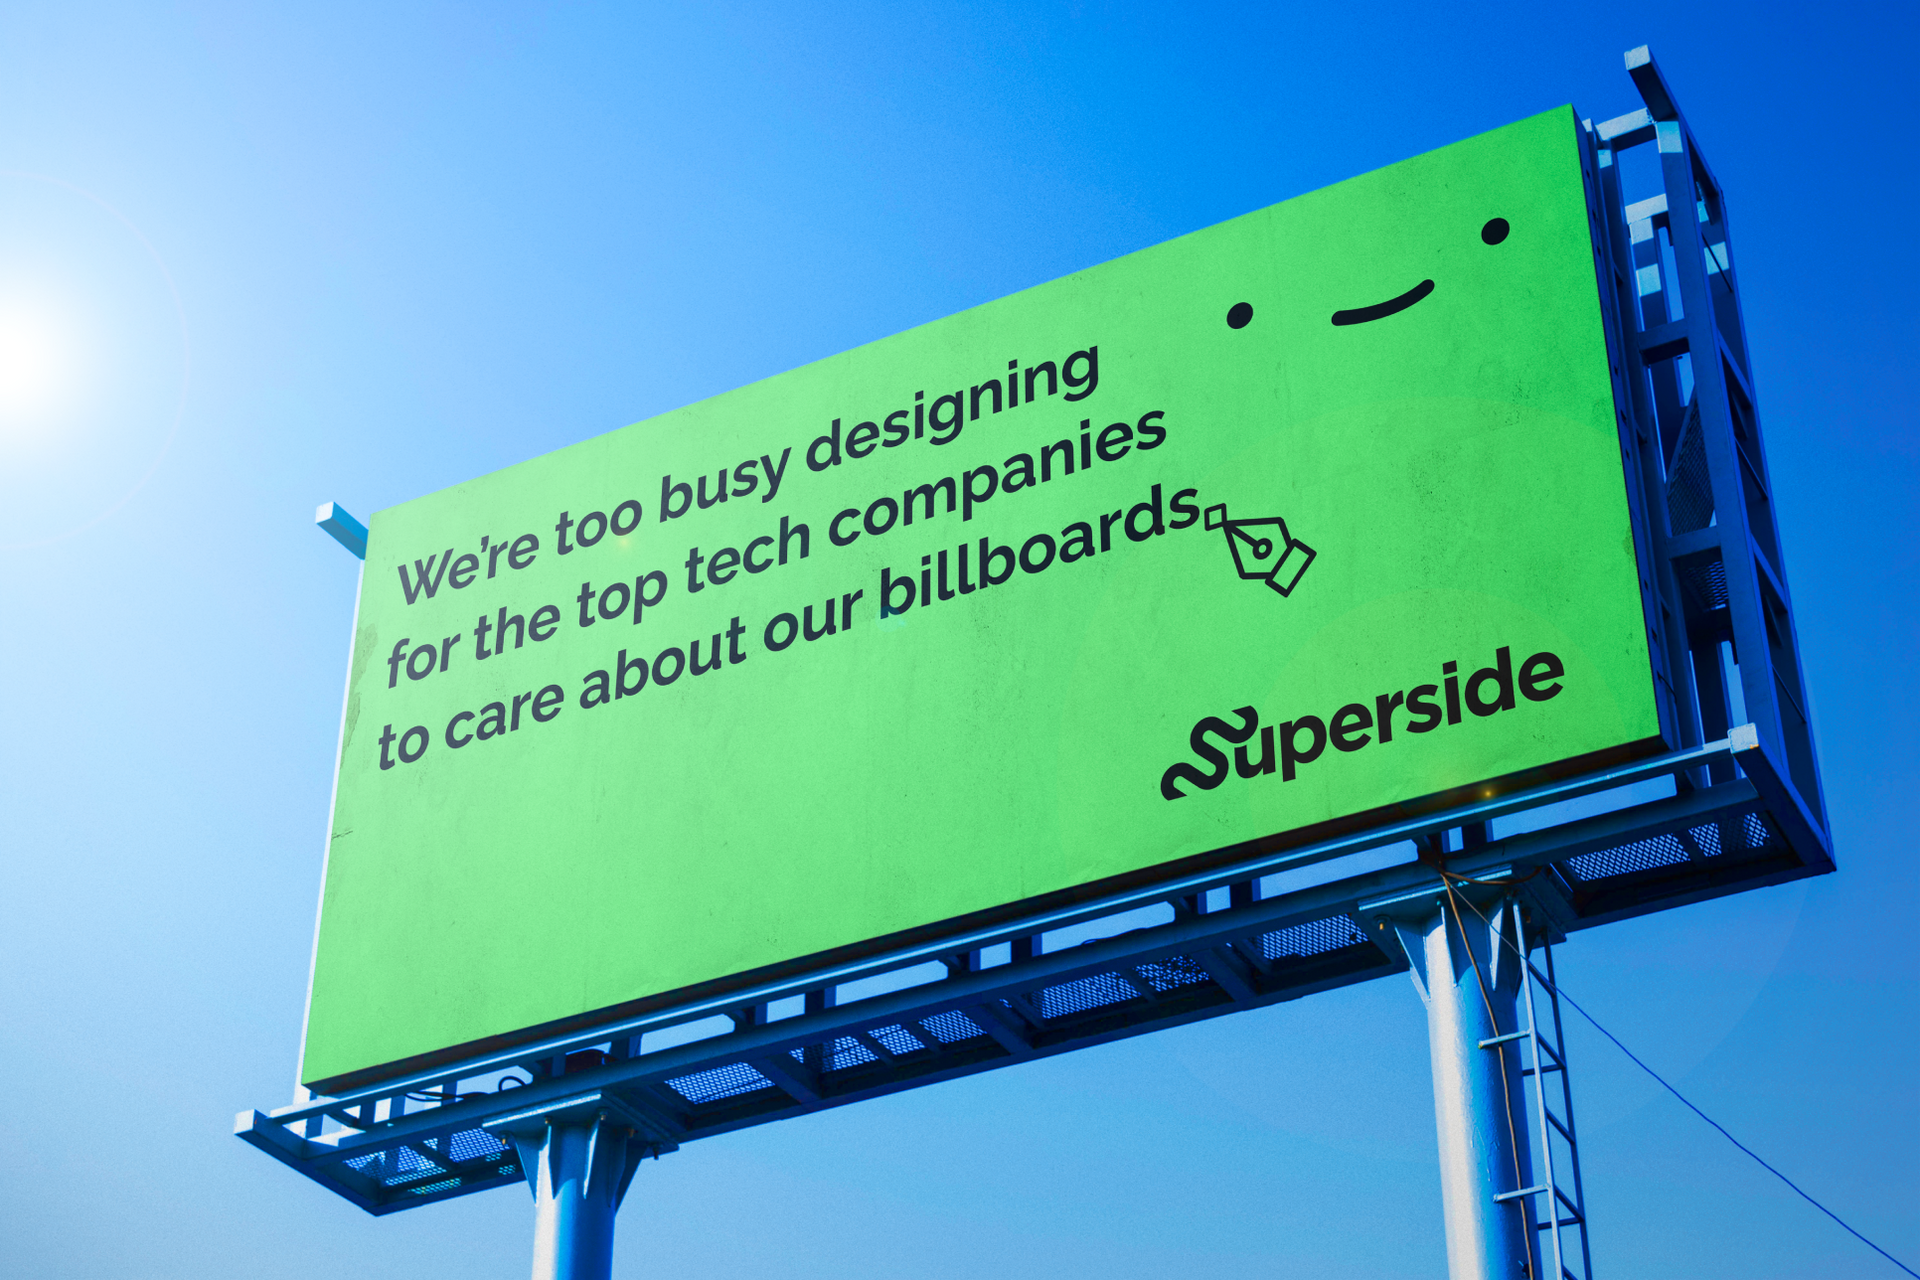 A billboard advertising Superside.